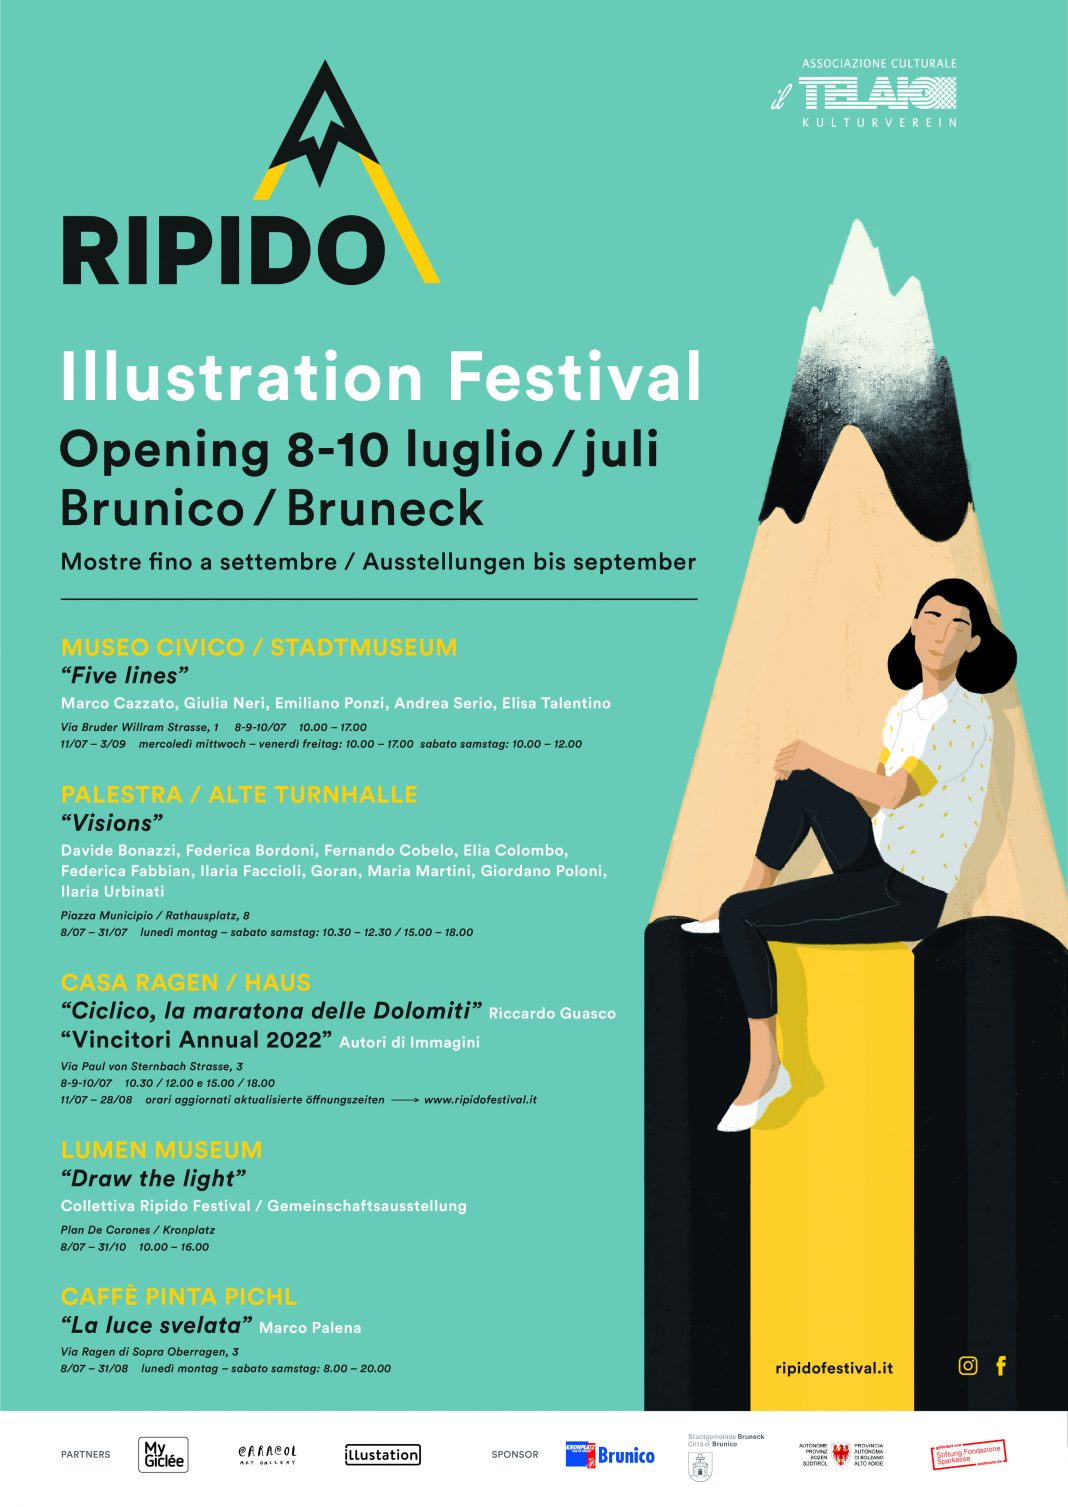 RIPIDO Illustration Festivalhttps://www.exibart.com/repository/media/formidable/11/img/eb0/Ripido_Poster-01-1068x1507.jpg